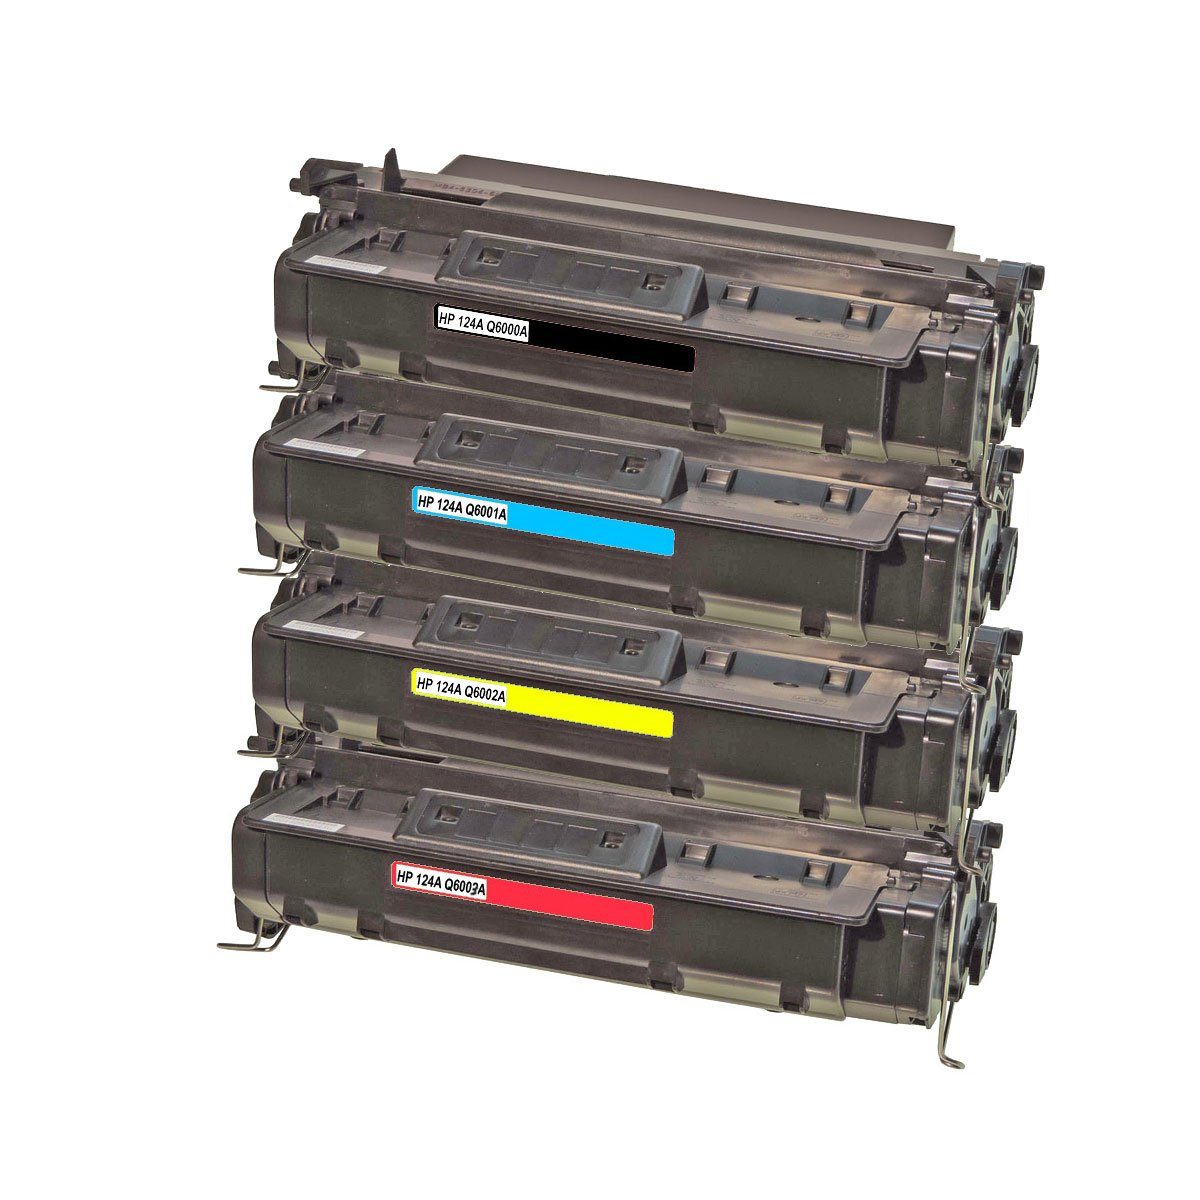 Gigao Tonerkartusche Kompatibel HP 124A Multipack 4-Farben (Schwarz, Cyan, Magenta, Gelb), für HP Color LaserJet 1600 | Tonerpatronen